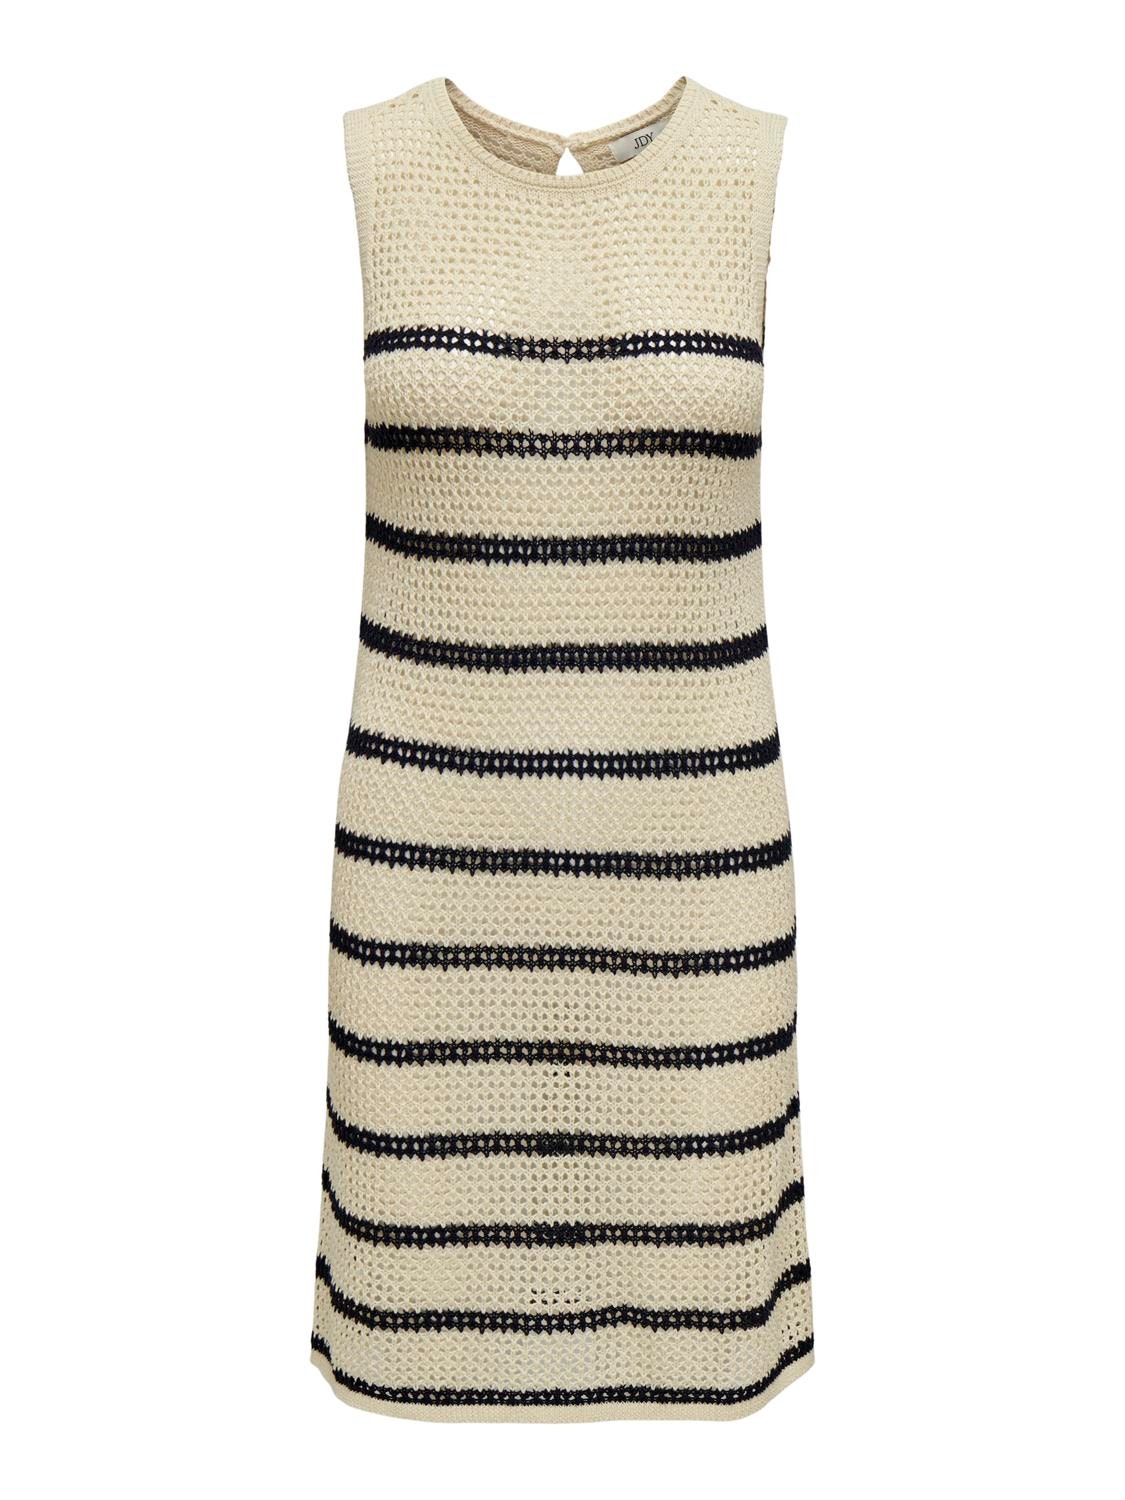 ONLY Mini striped dress -Birch - 15325046